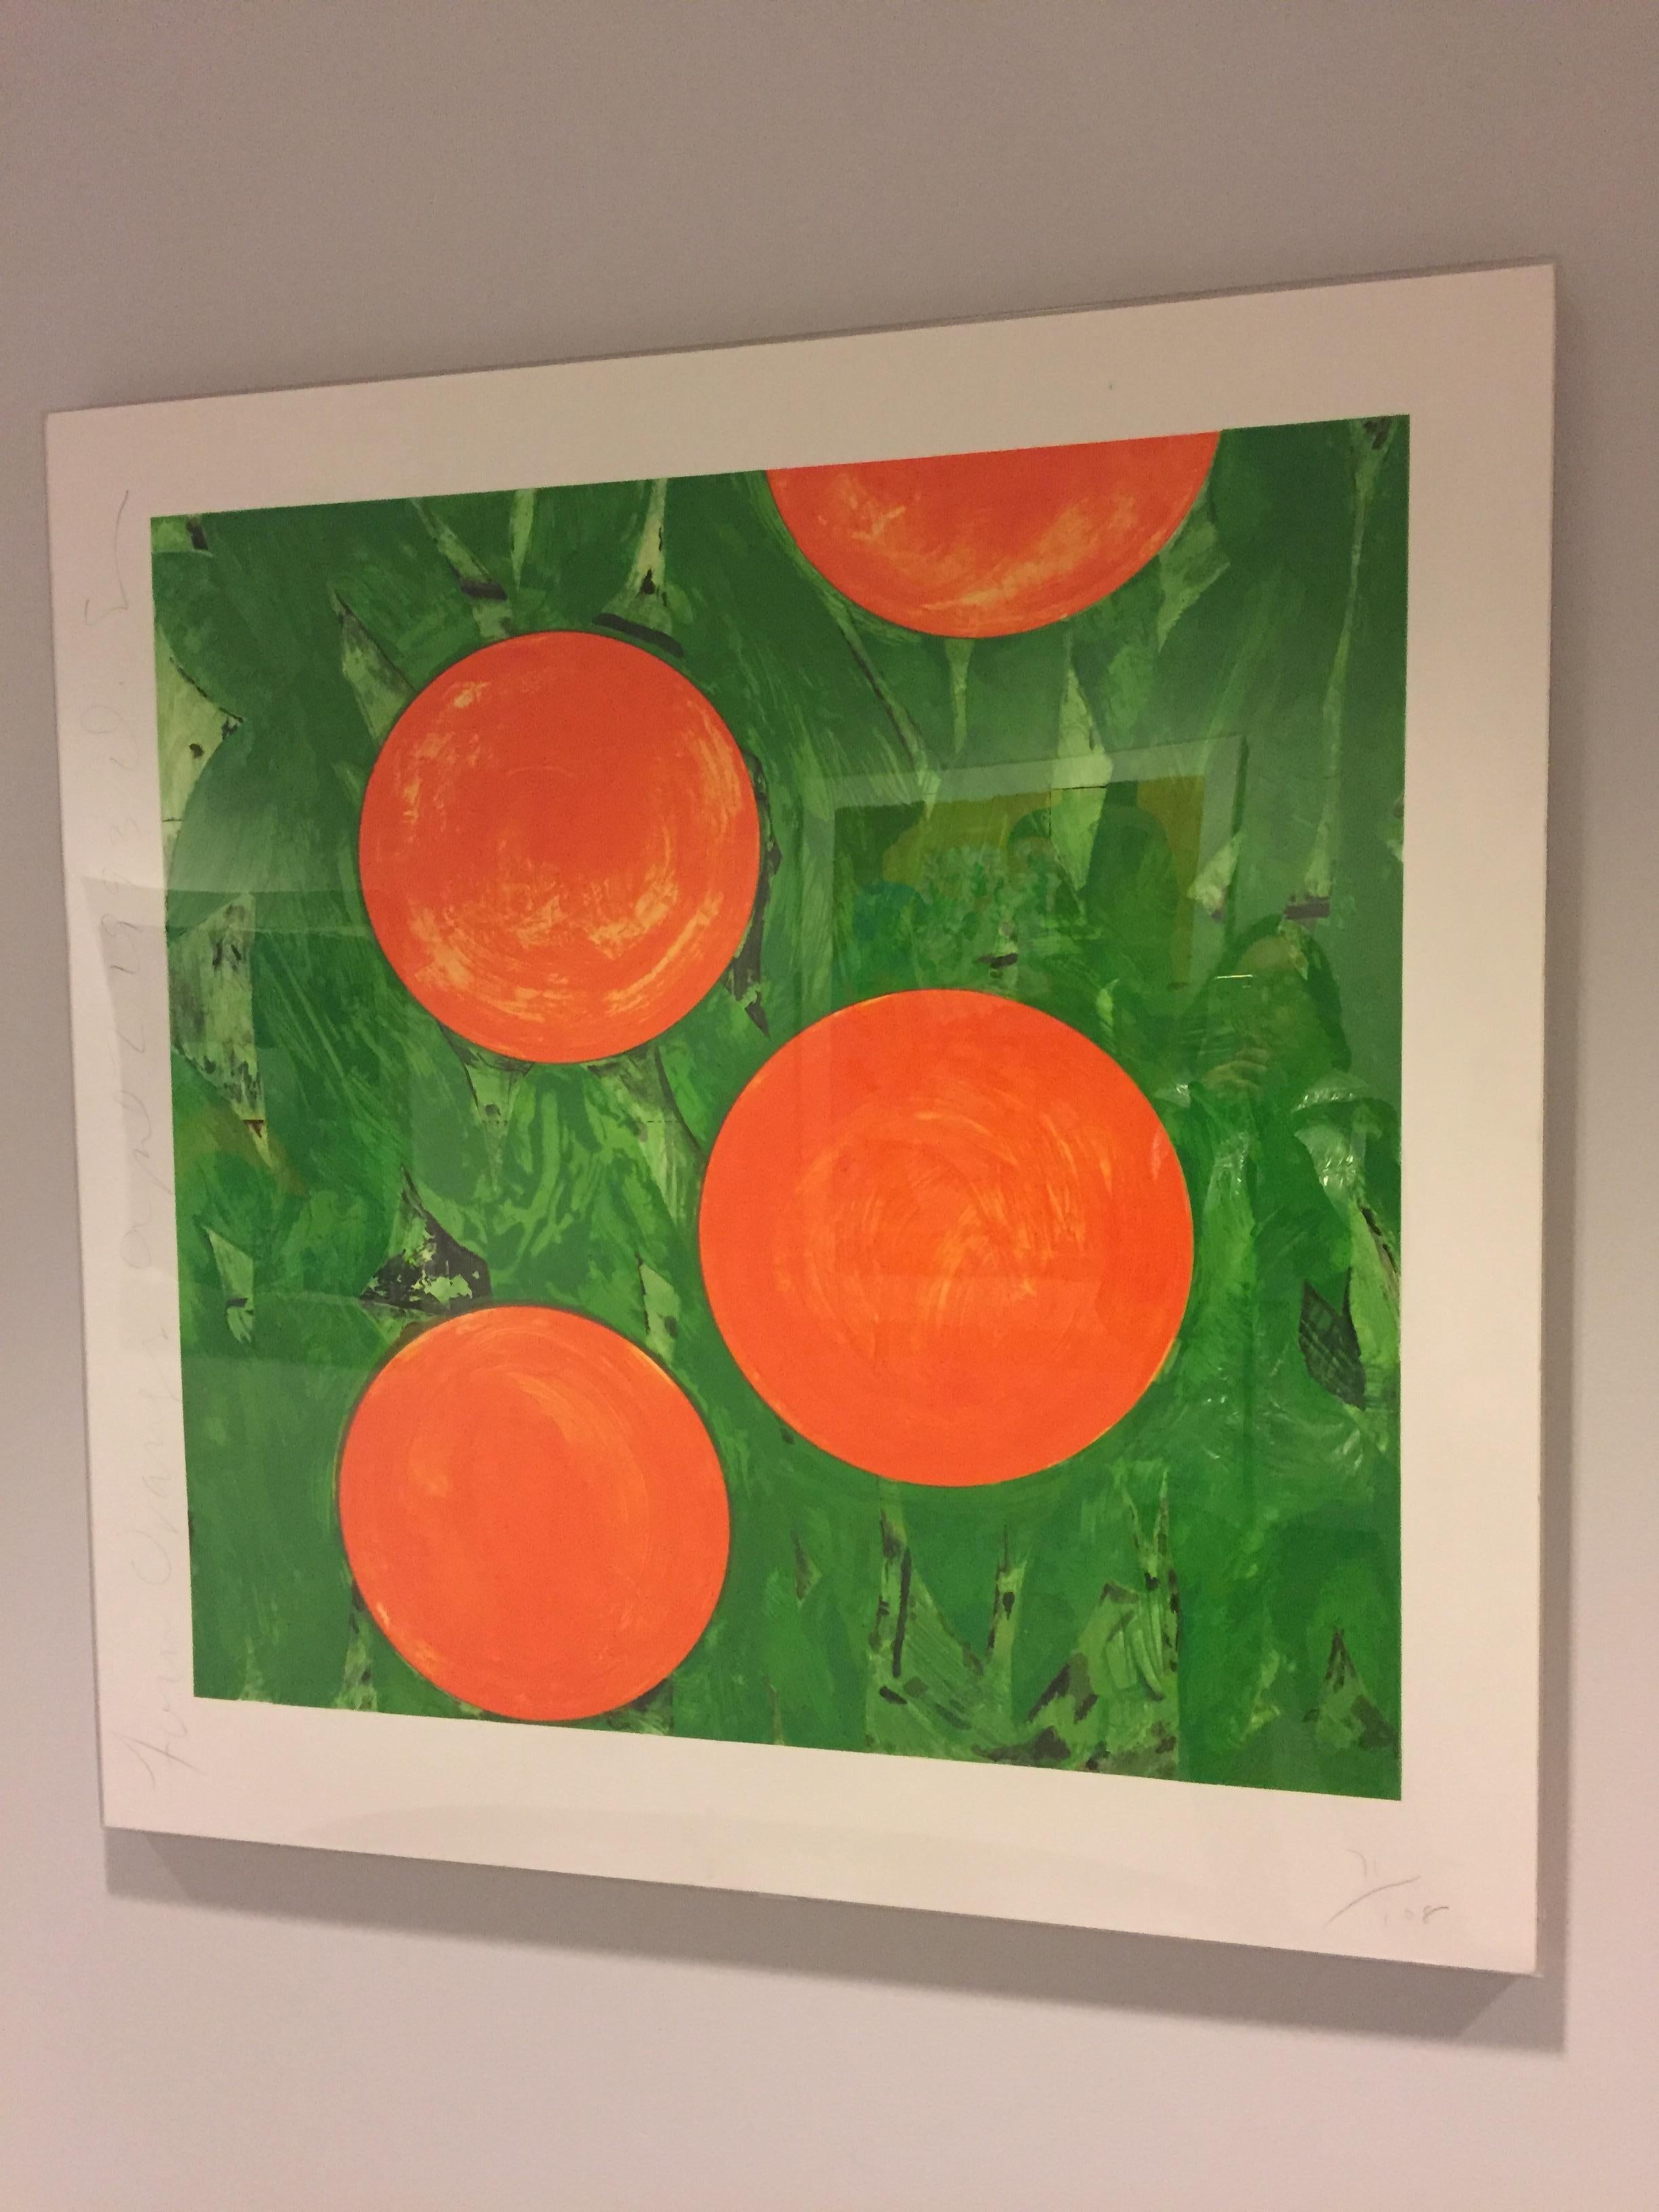 Four Oranges - Print by Donald Sultan